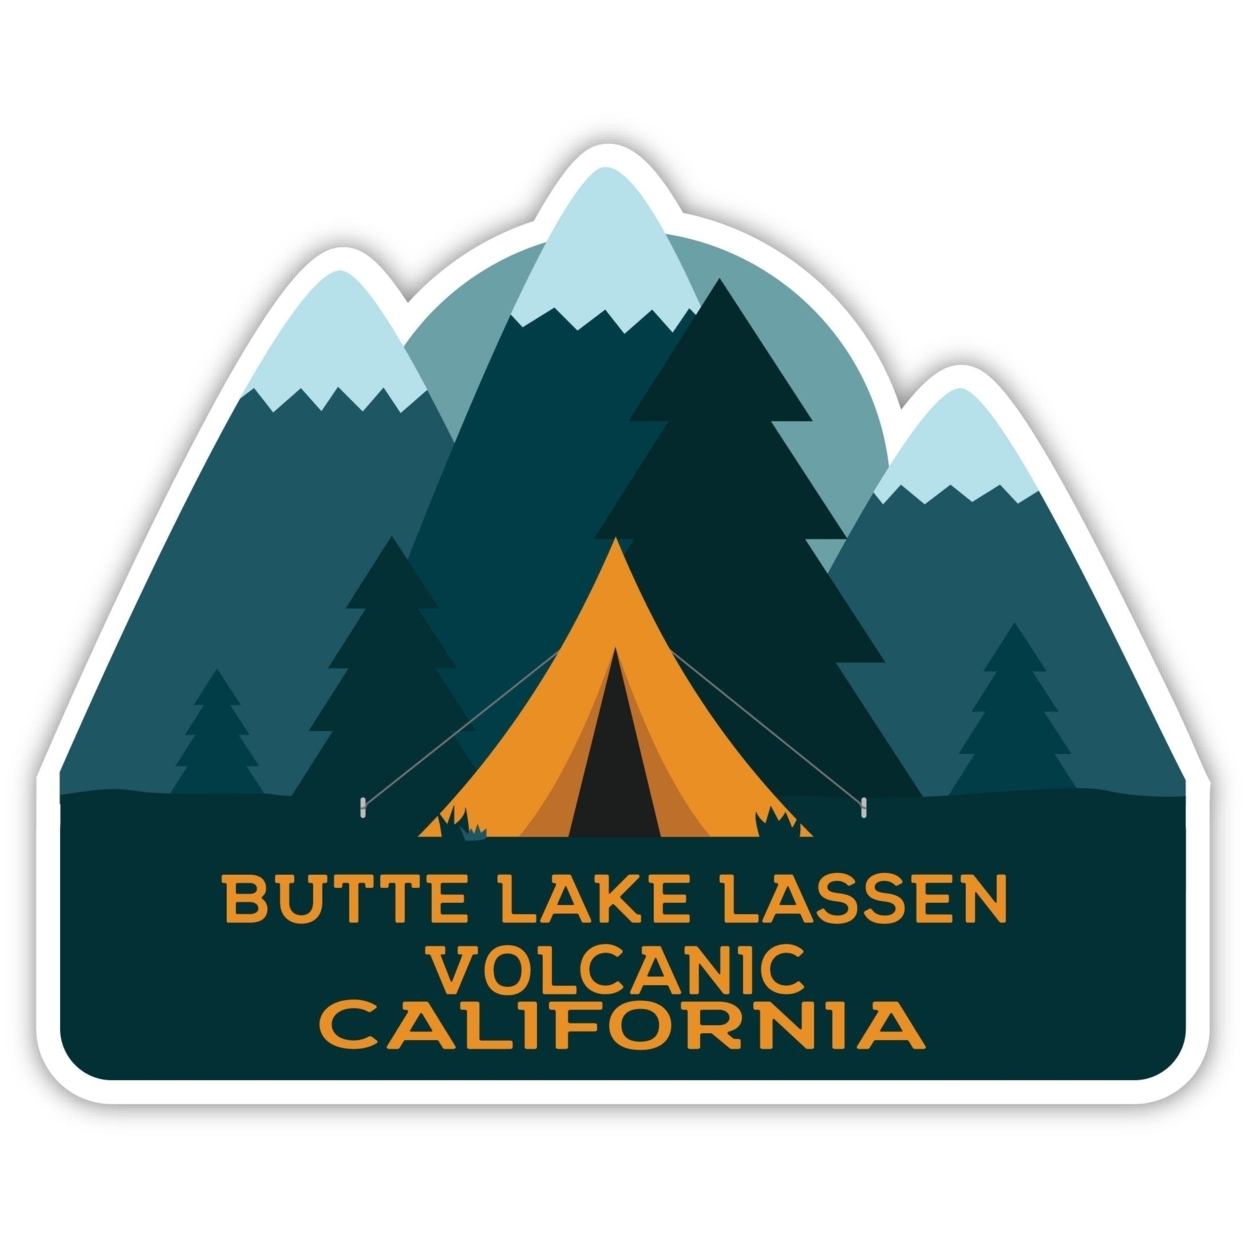 Butte Lake Lassen Volcanic California Souvenir Decorative Stickers (Choose Theme And Size) - Single Unit, 12-Inch, Tent